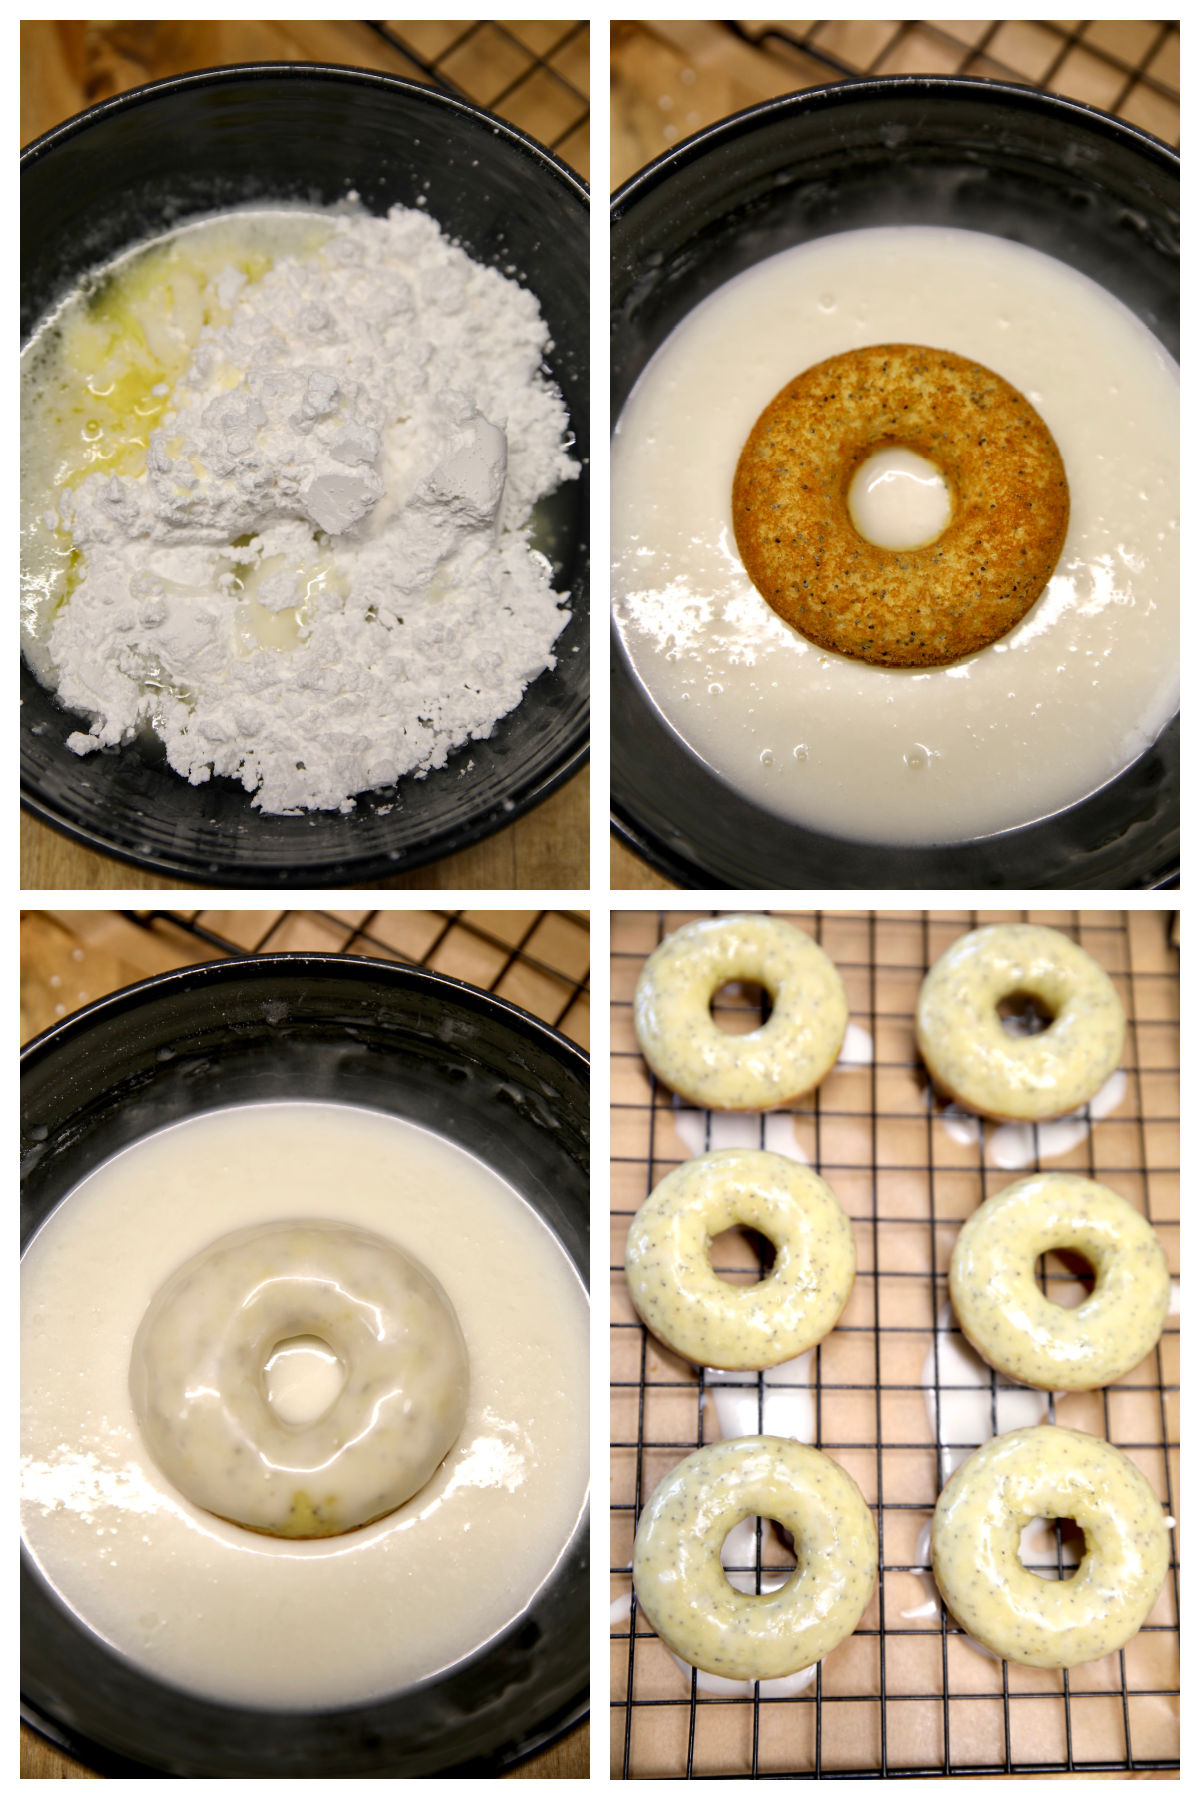 Collage: making lemon glaze for lemon donuts, glazing the donuts.